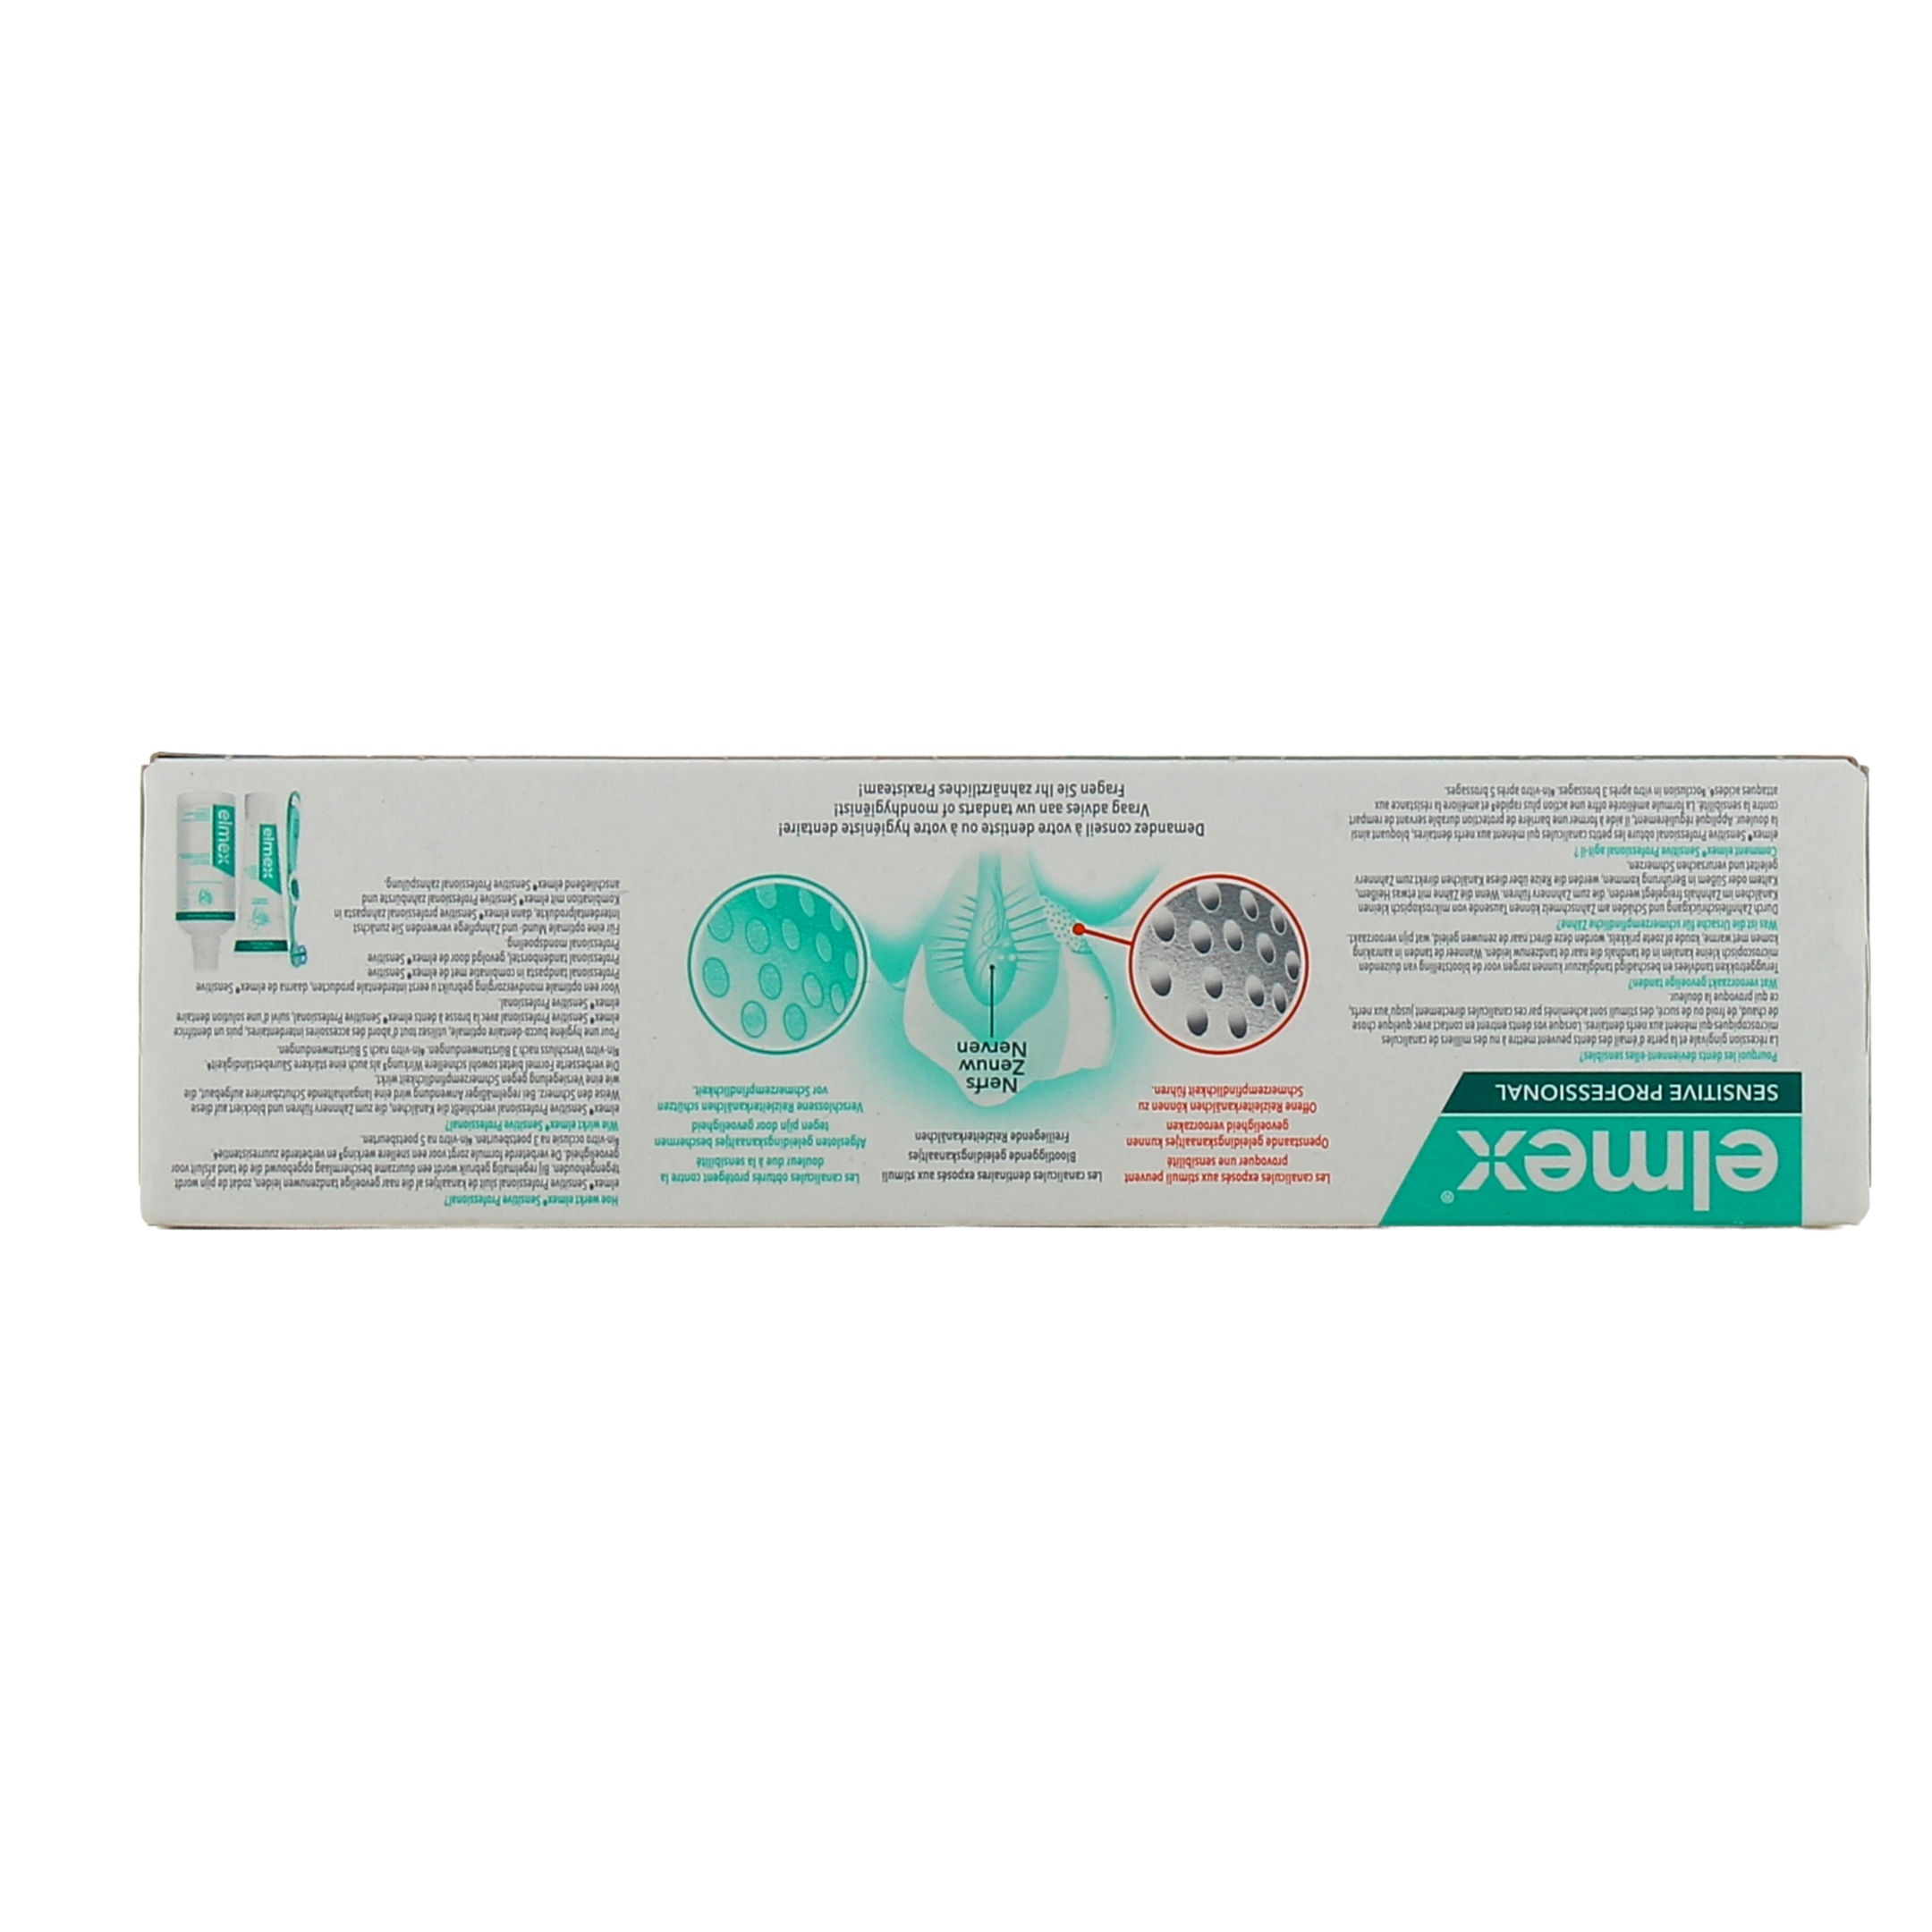 elmex® Sensitive Dentifrice tubes de voyage 1 pc(s) - Redcare Pharmacie